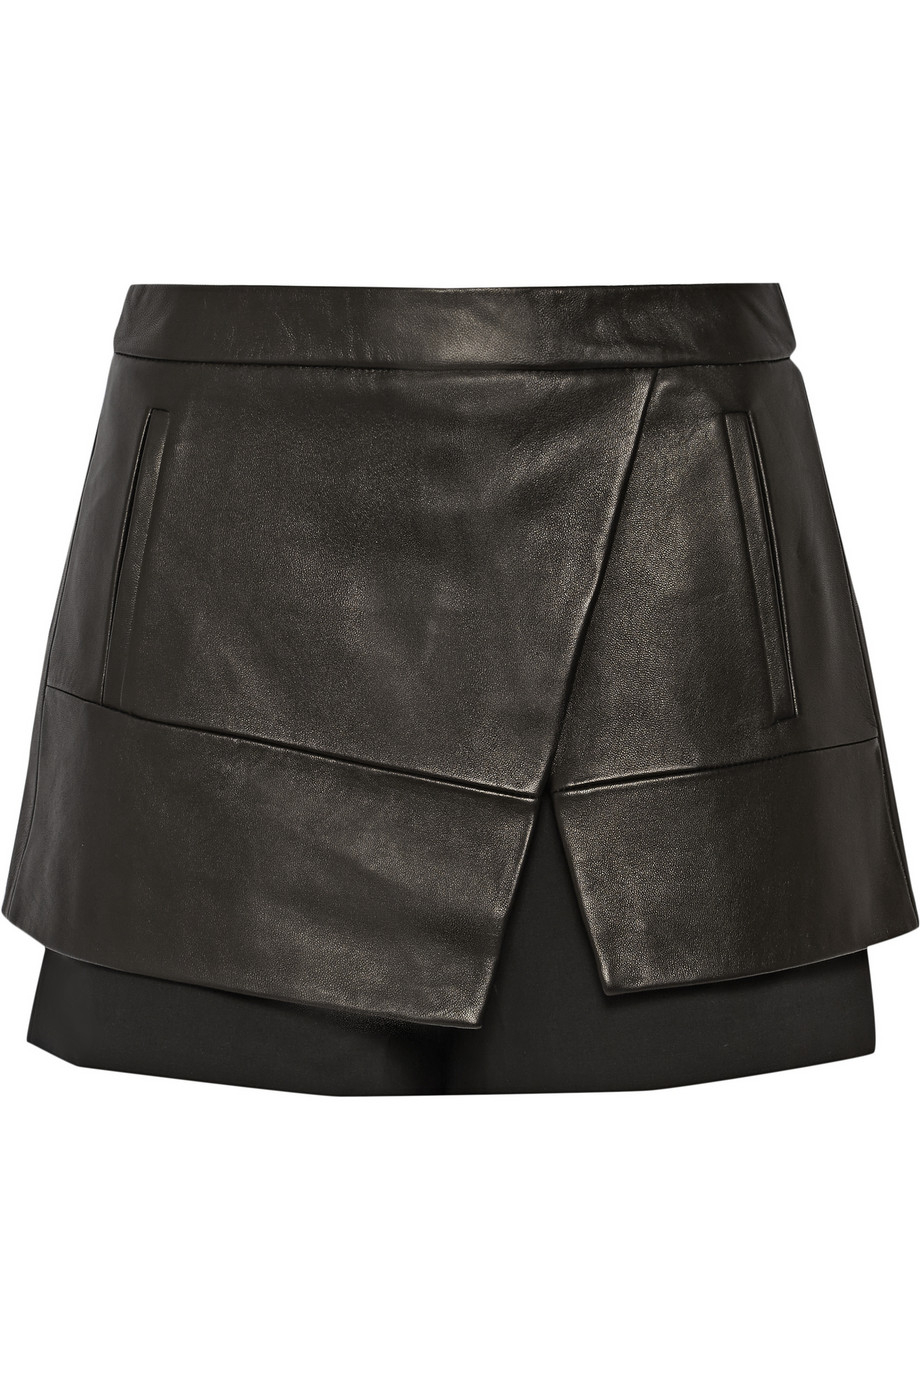 Tibi Leather And Gabardine Shorts in Black | Lyst